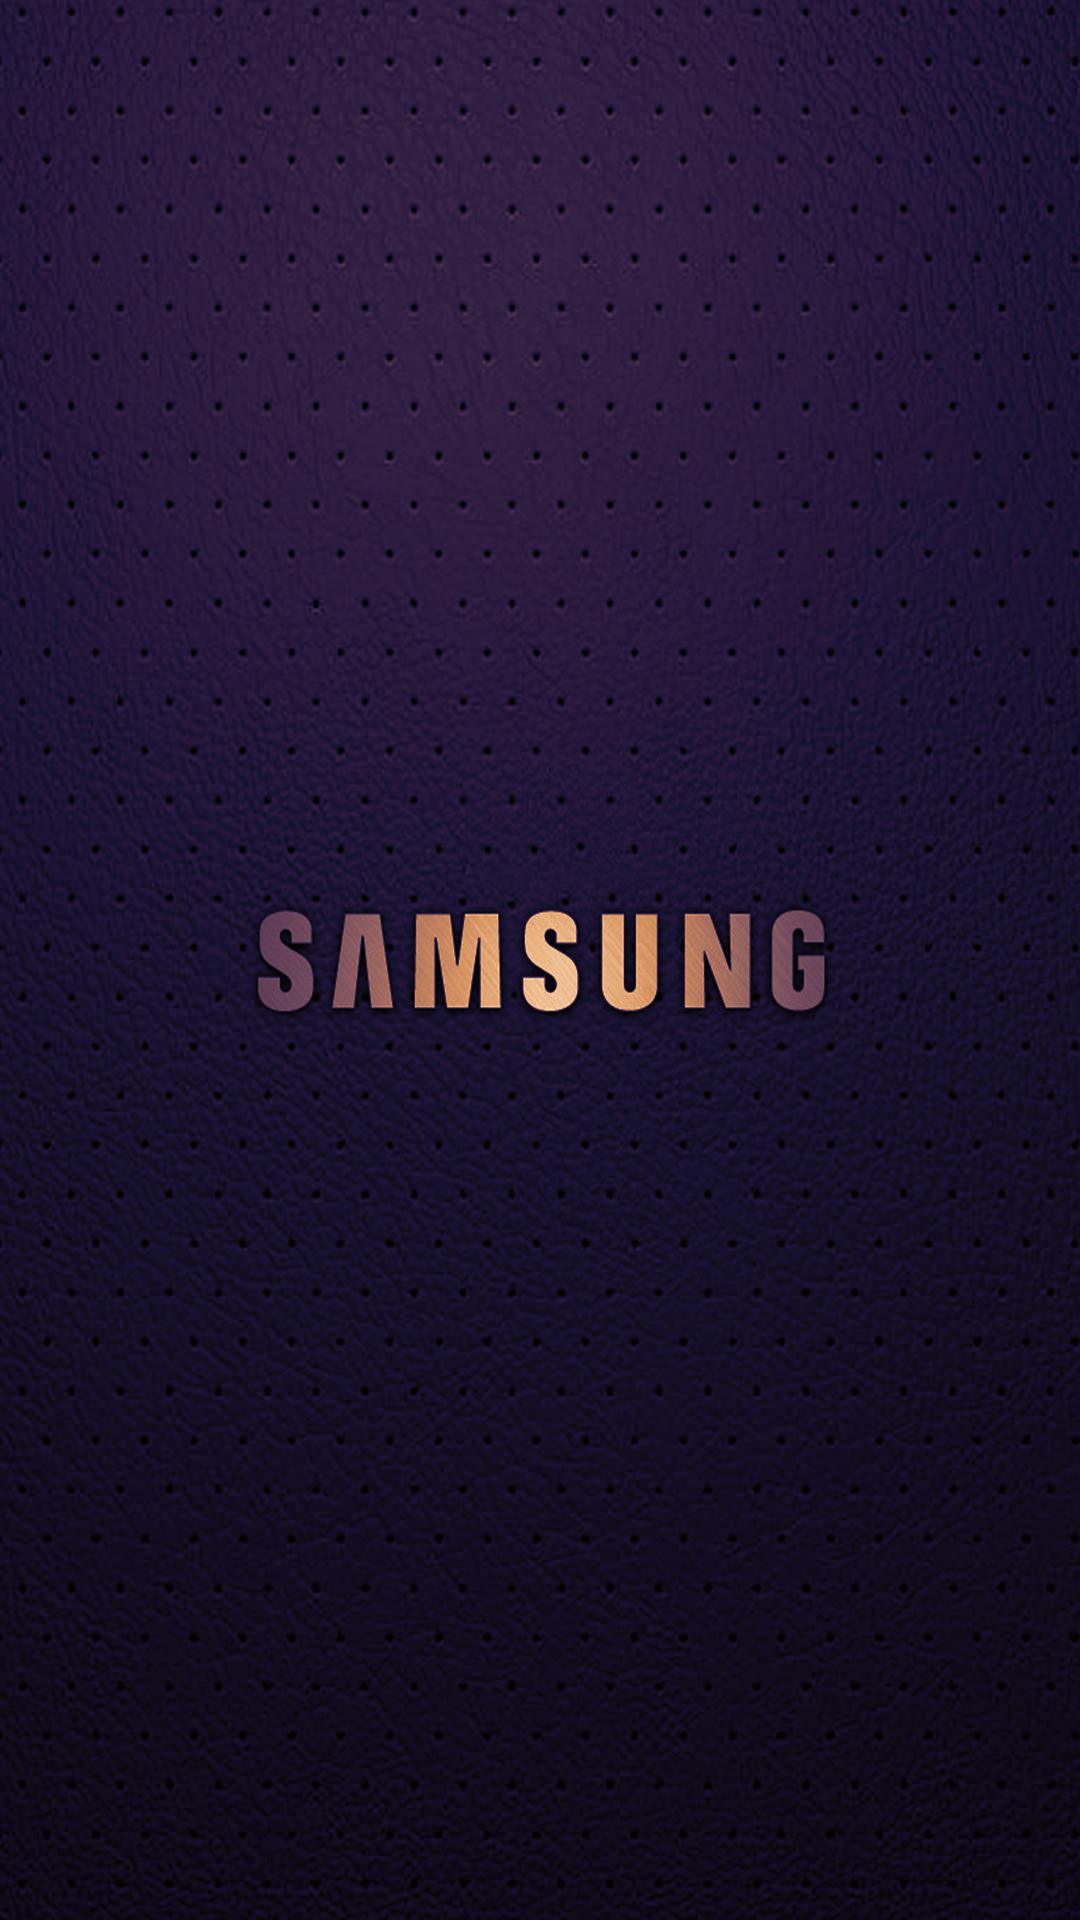 SAMSUNG Logo | Wallpaper.sc SmartPhone